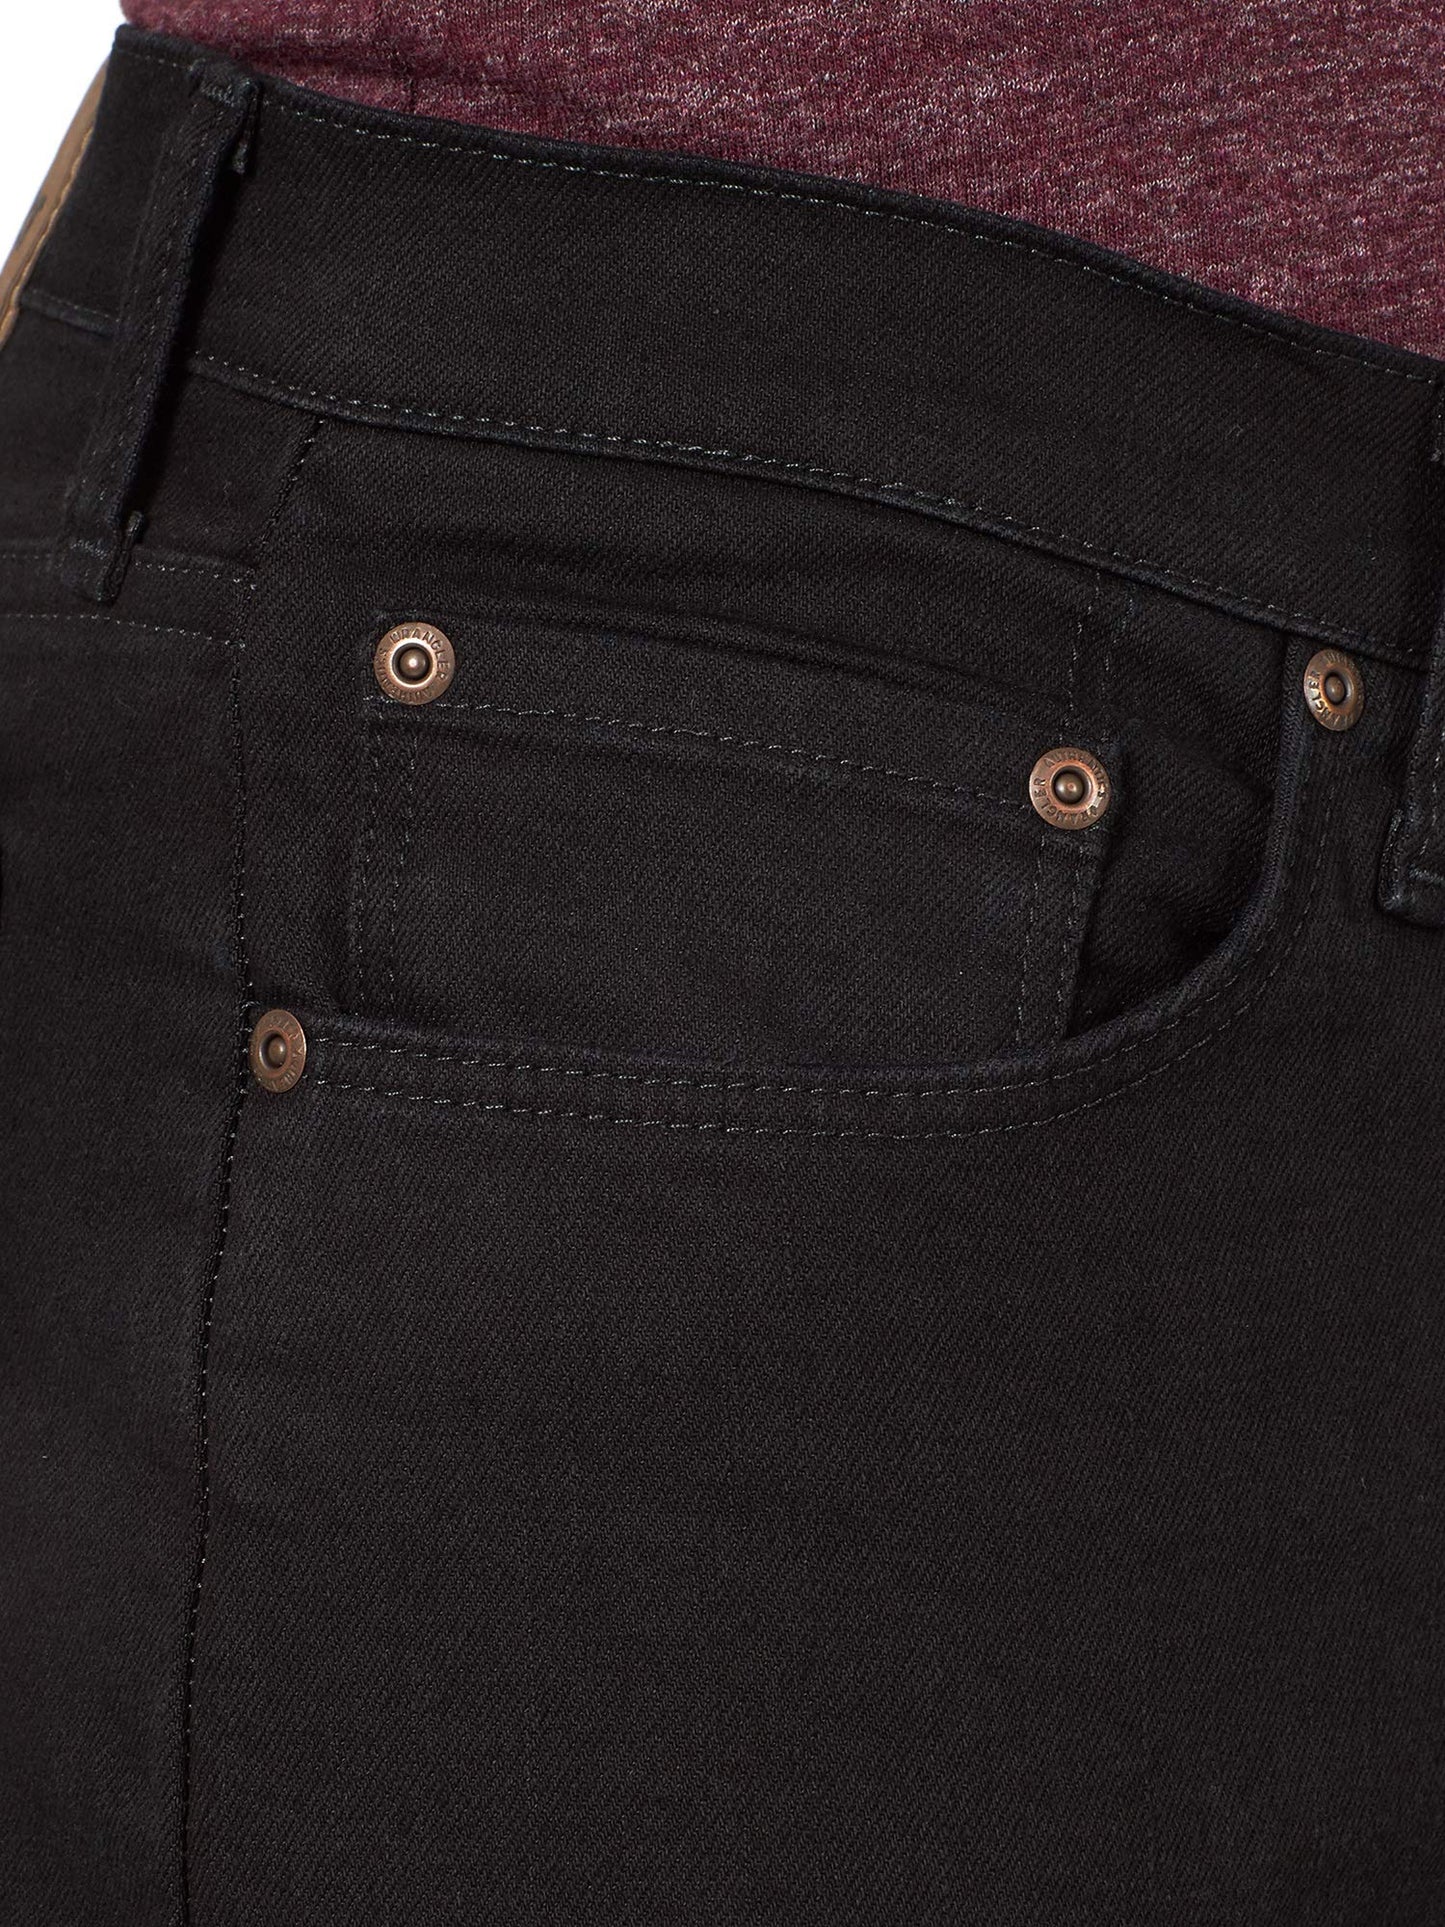 Wrangler Authentics Men's Classic 5-Pocket Regular Fit Jean, Black Flex, 30W X 32L